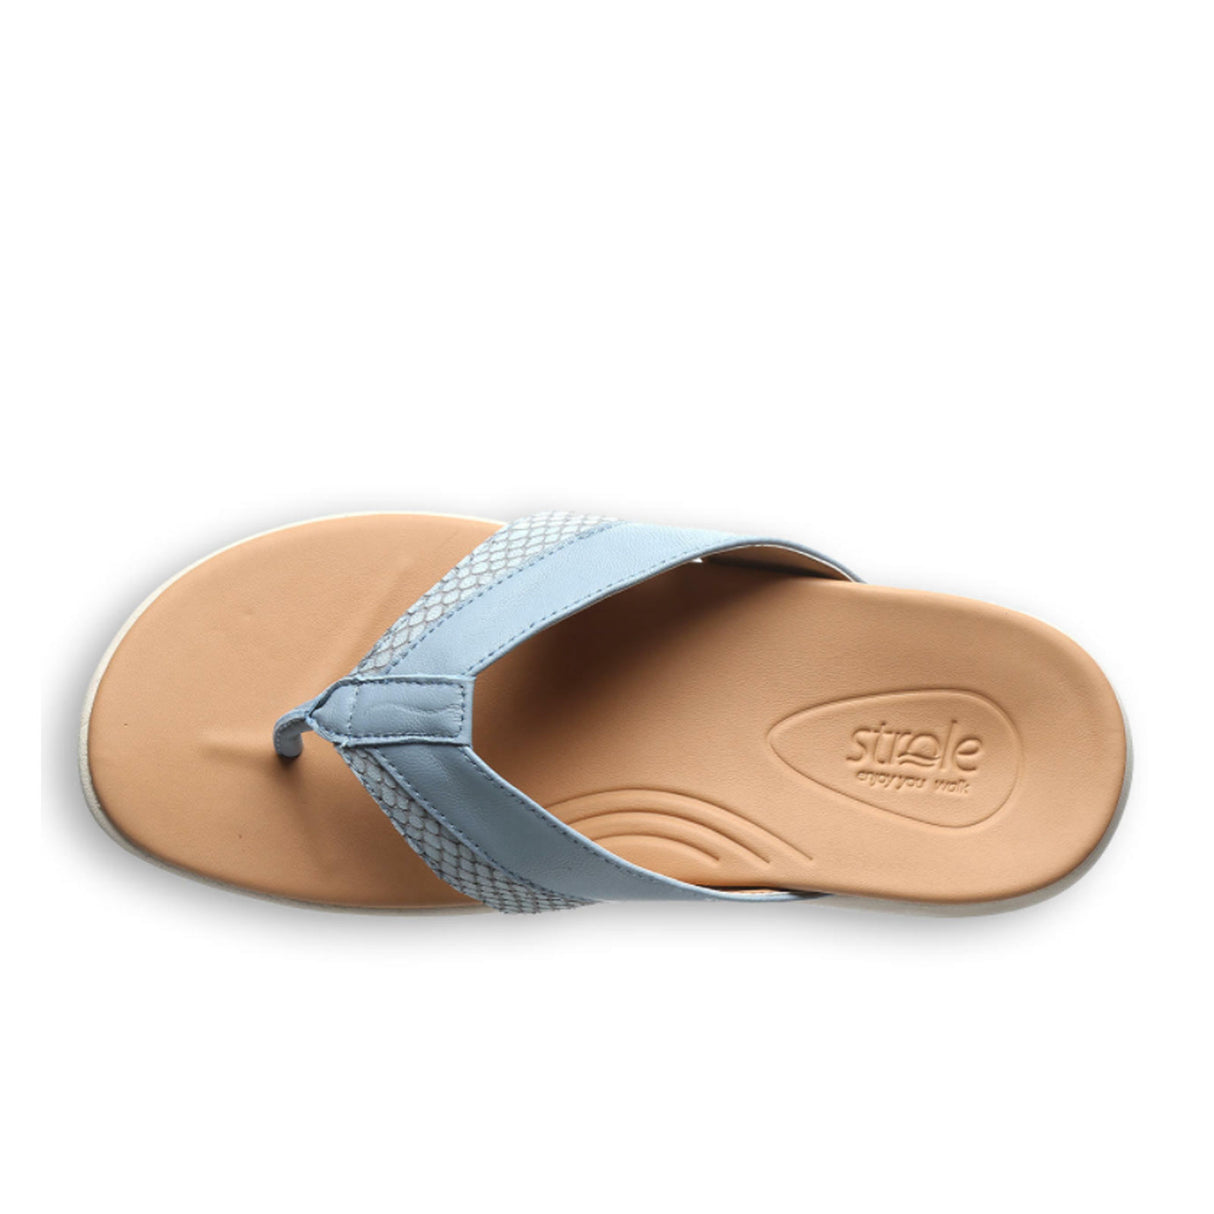 Strole Bliss Thong Sandal (Women) - Light Blue Sandals - Thong - The Heel Shoe Fitters